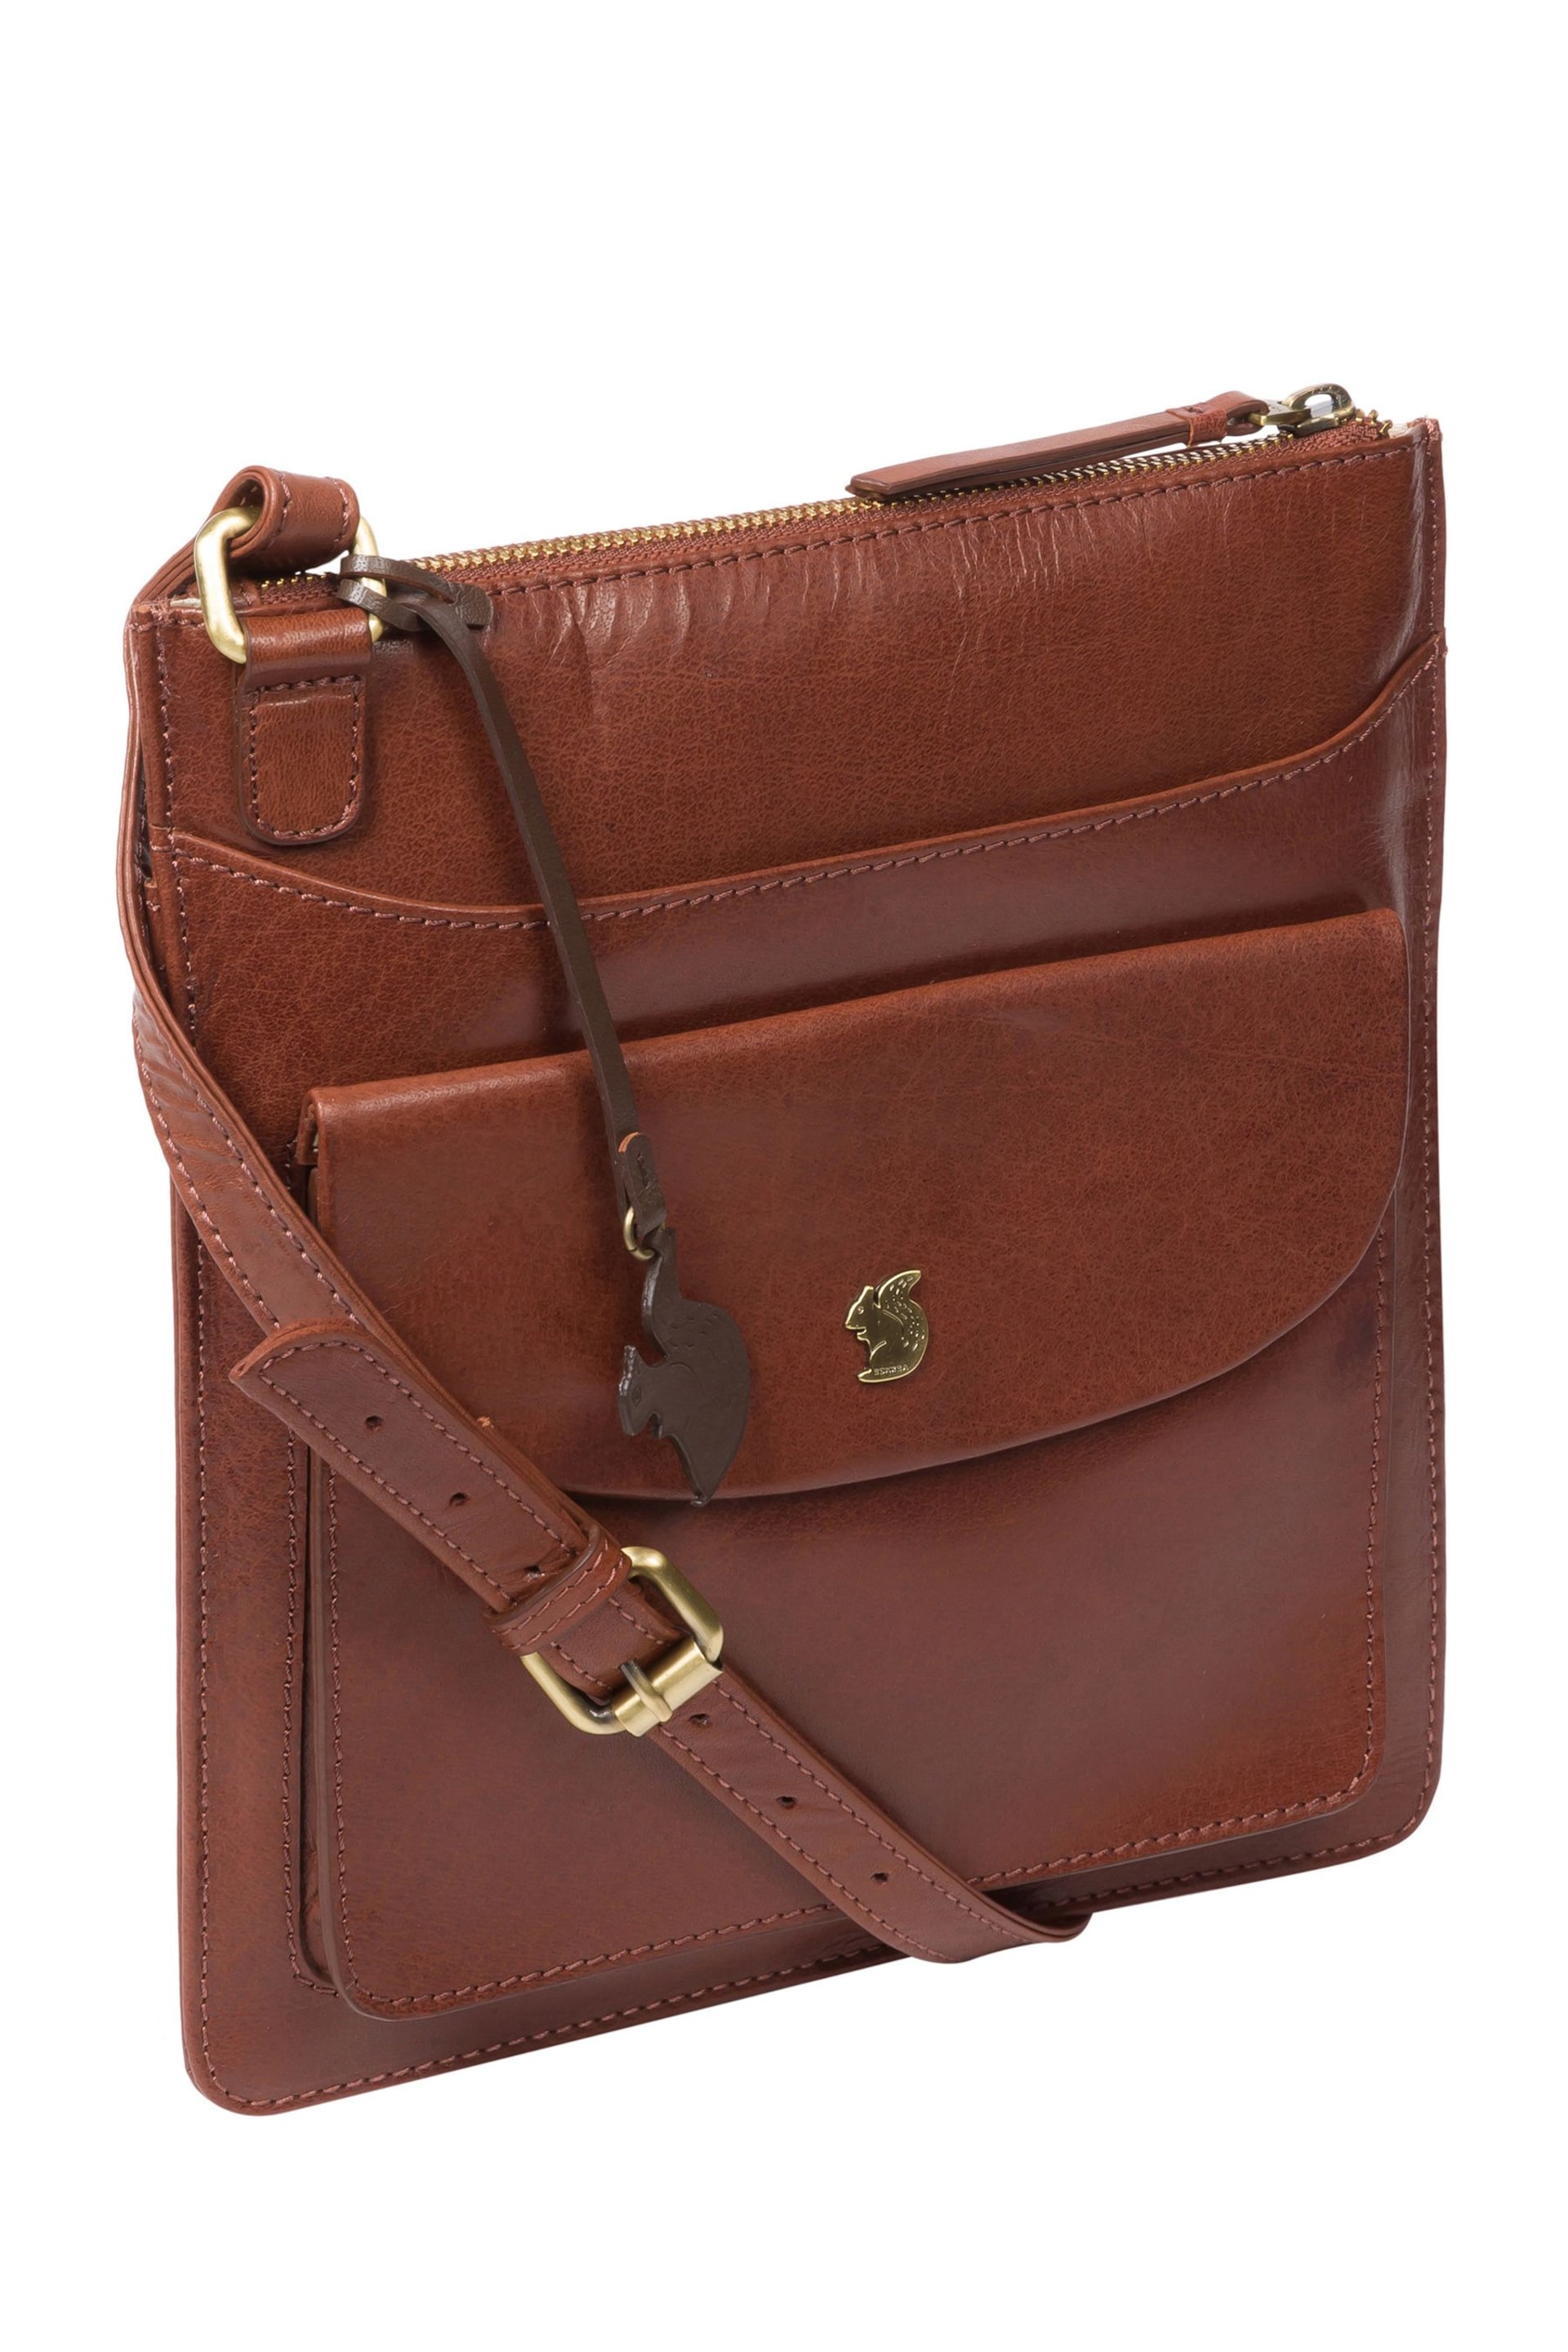 Conkca Lauryn Leather Cross-Body Bag - Image 5 of 5